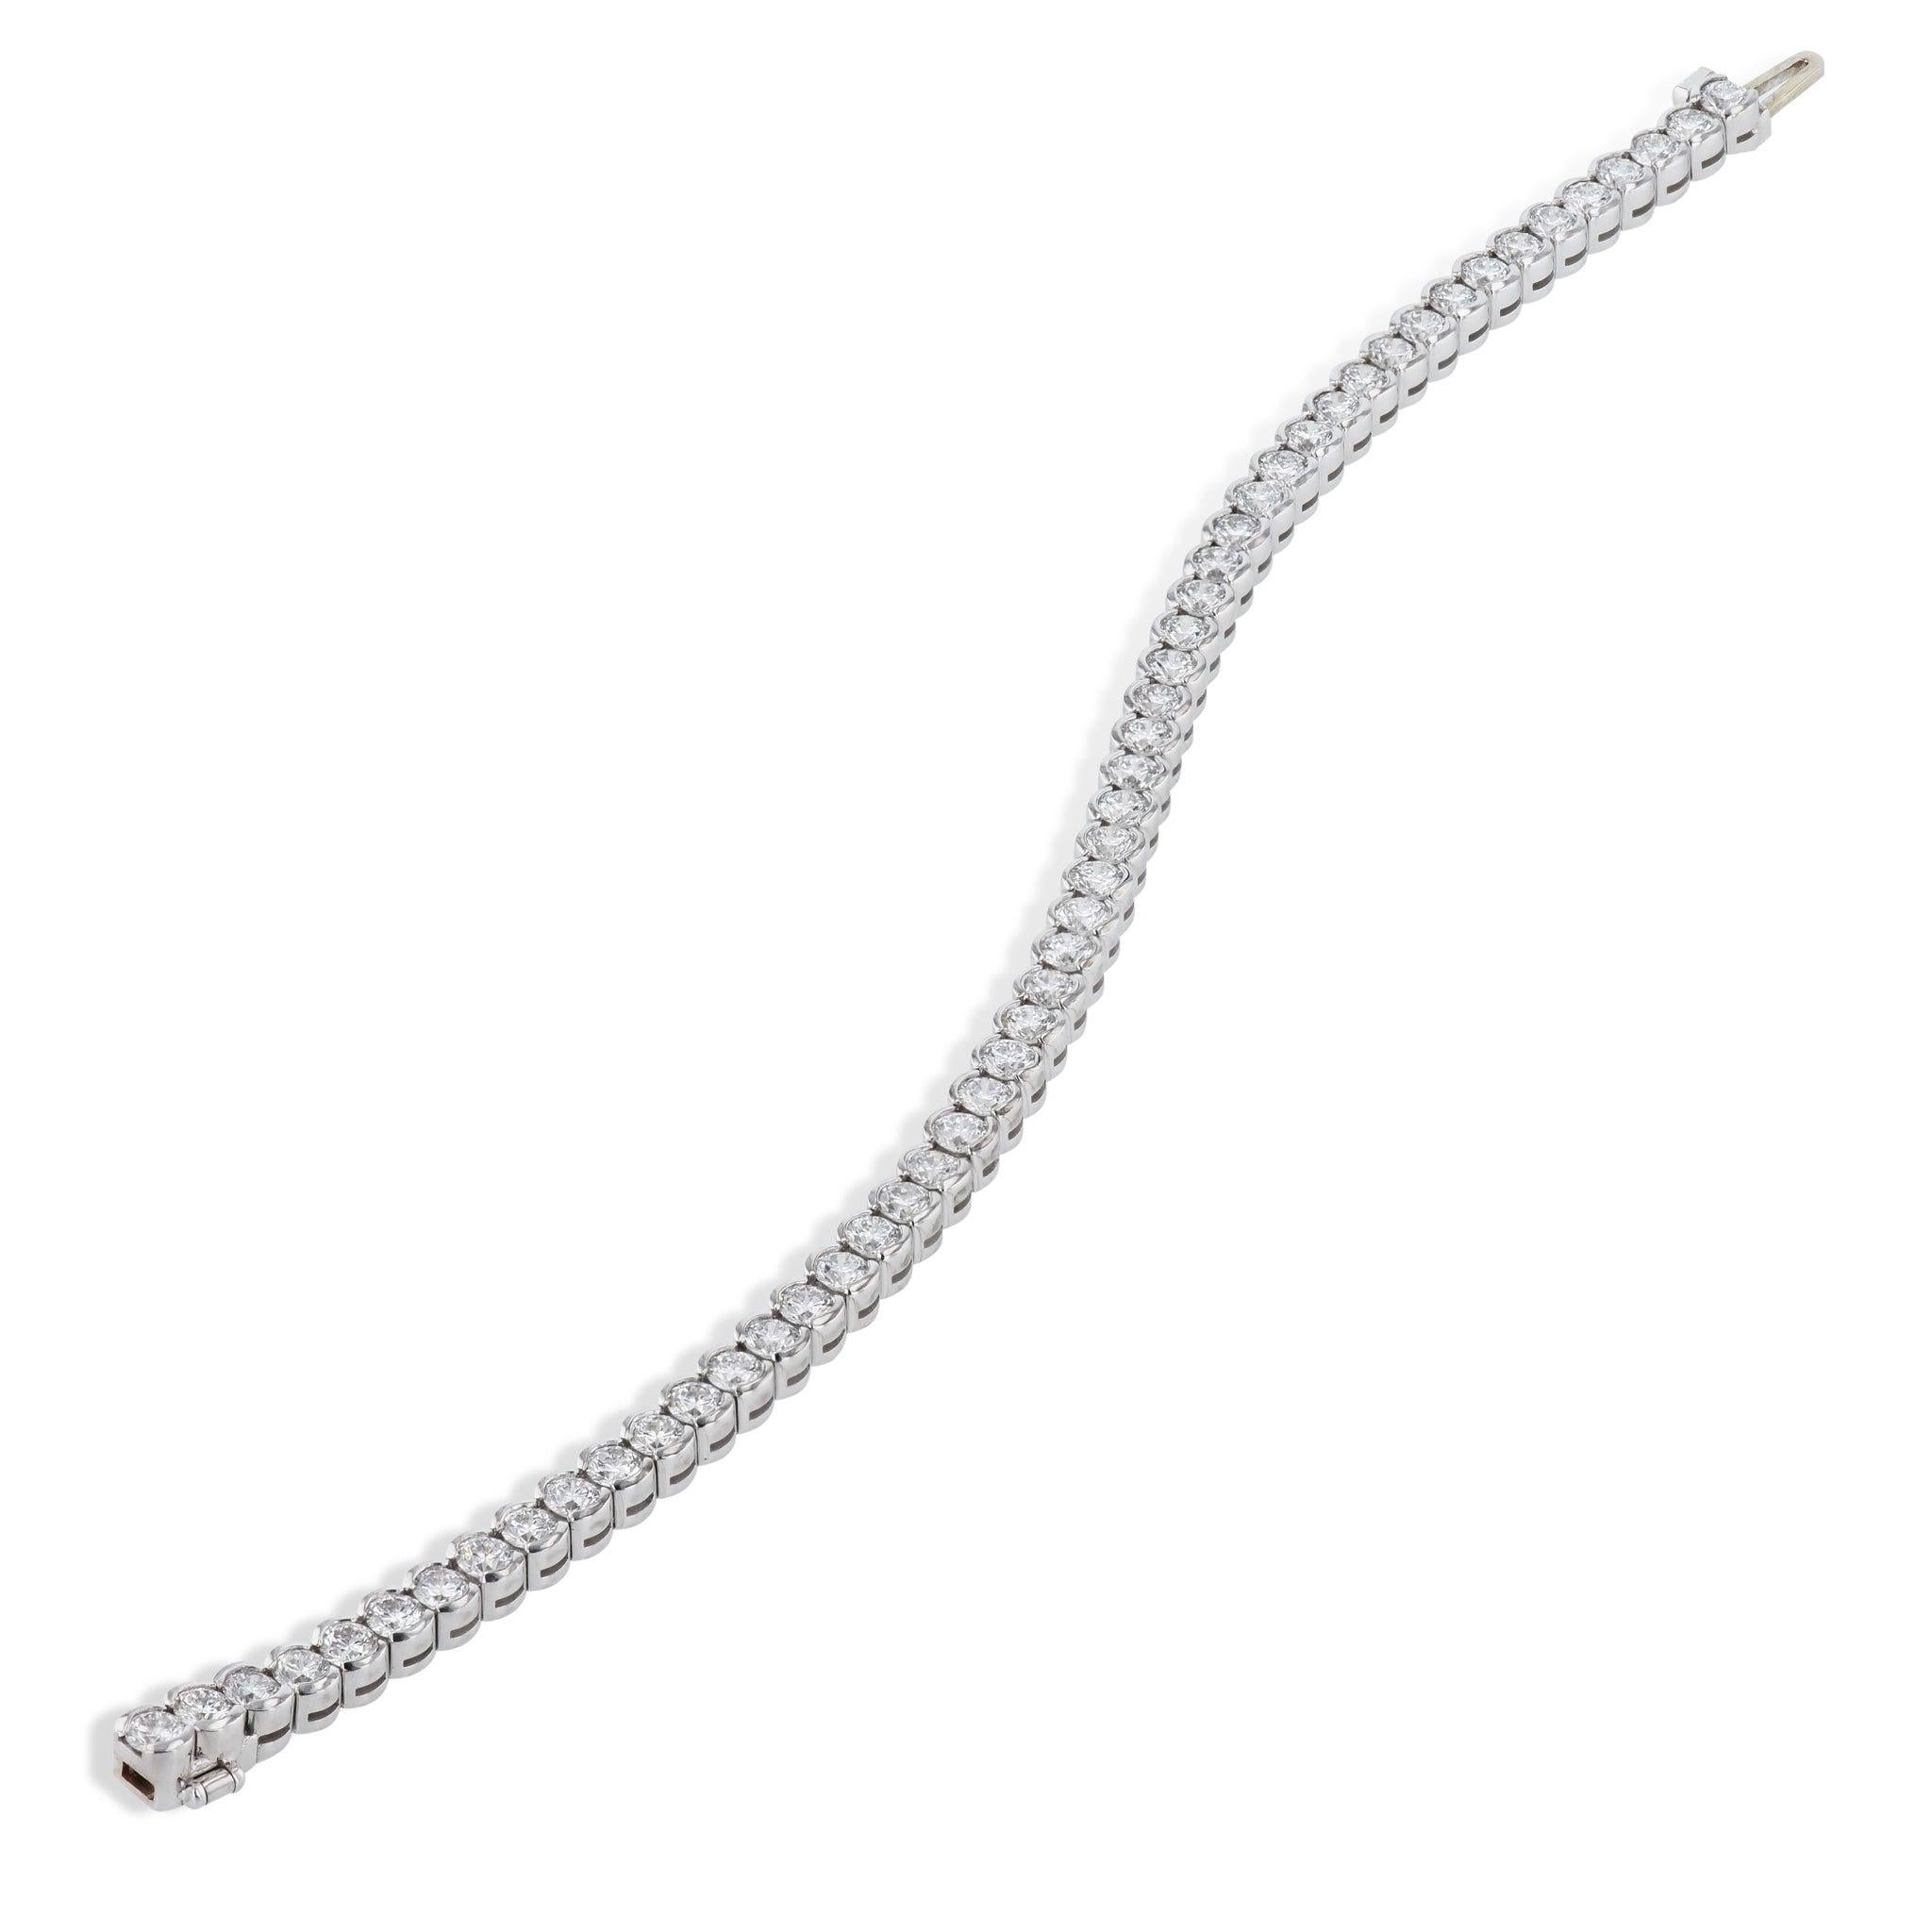 Taille brillant Bracelet de tennis en or blanc serti de diamants semi-bijoux de 6,36 carats en vente